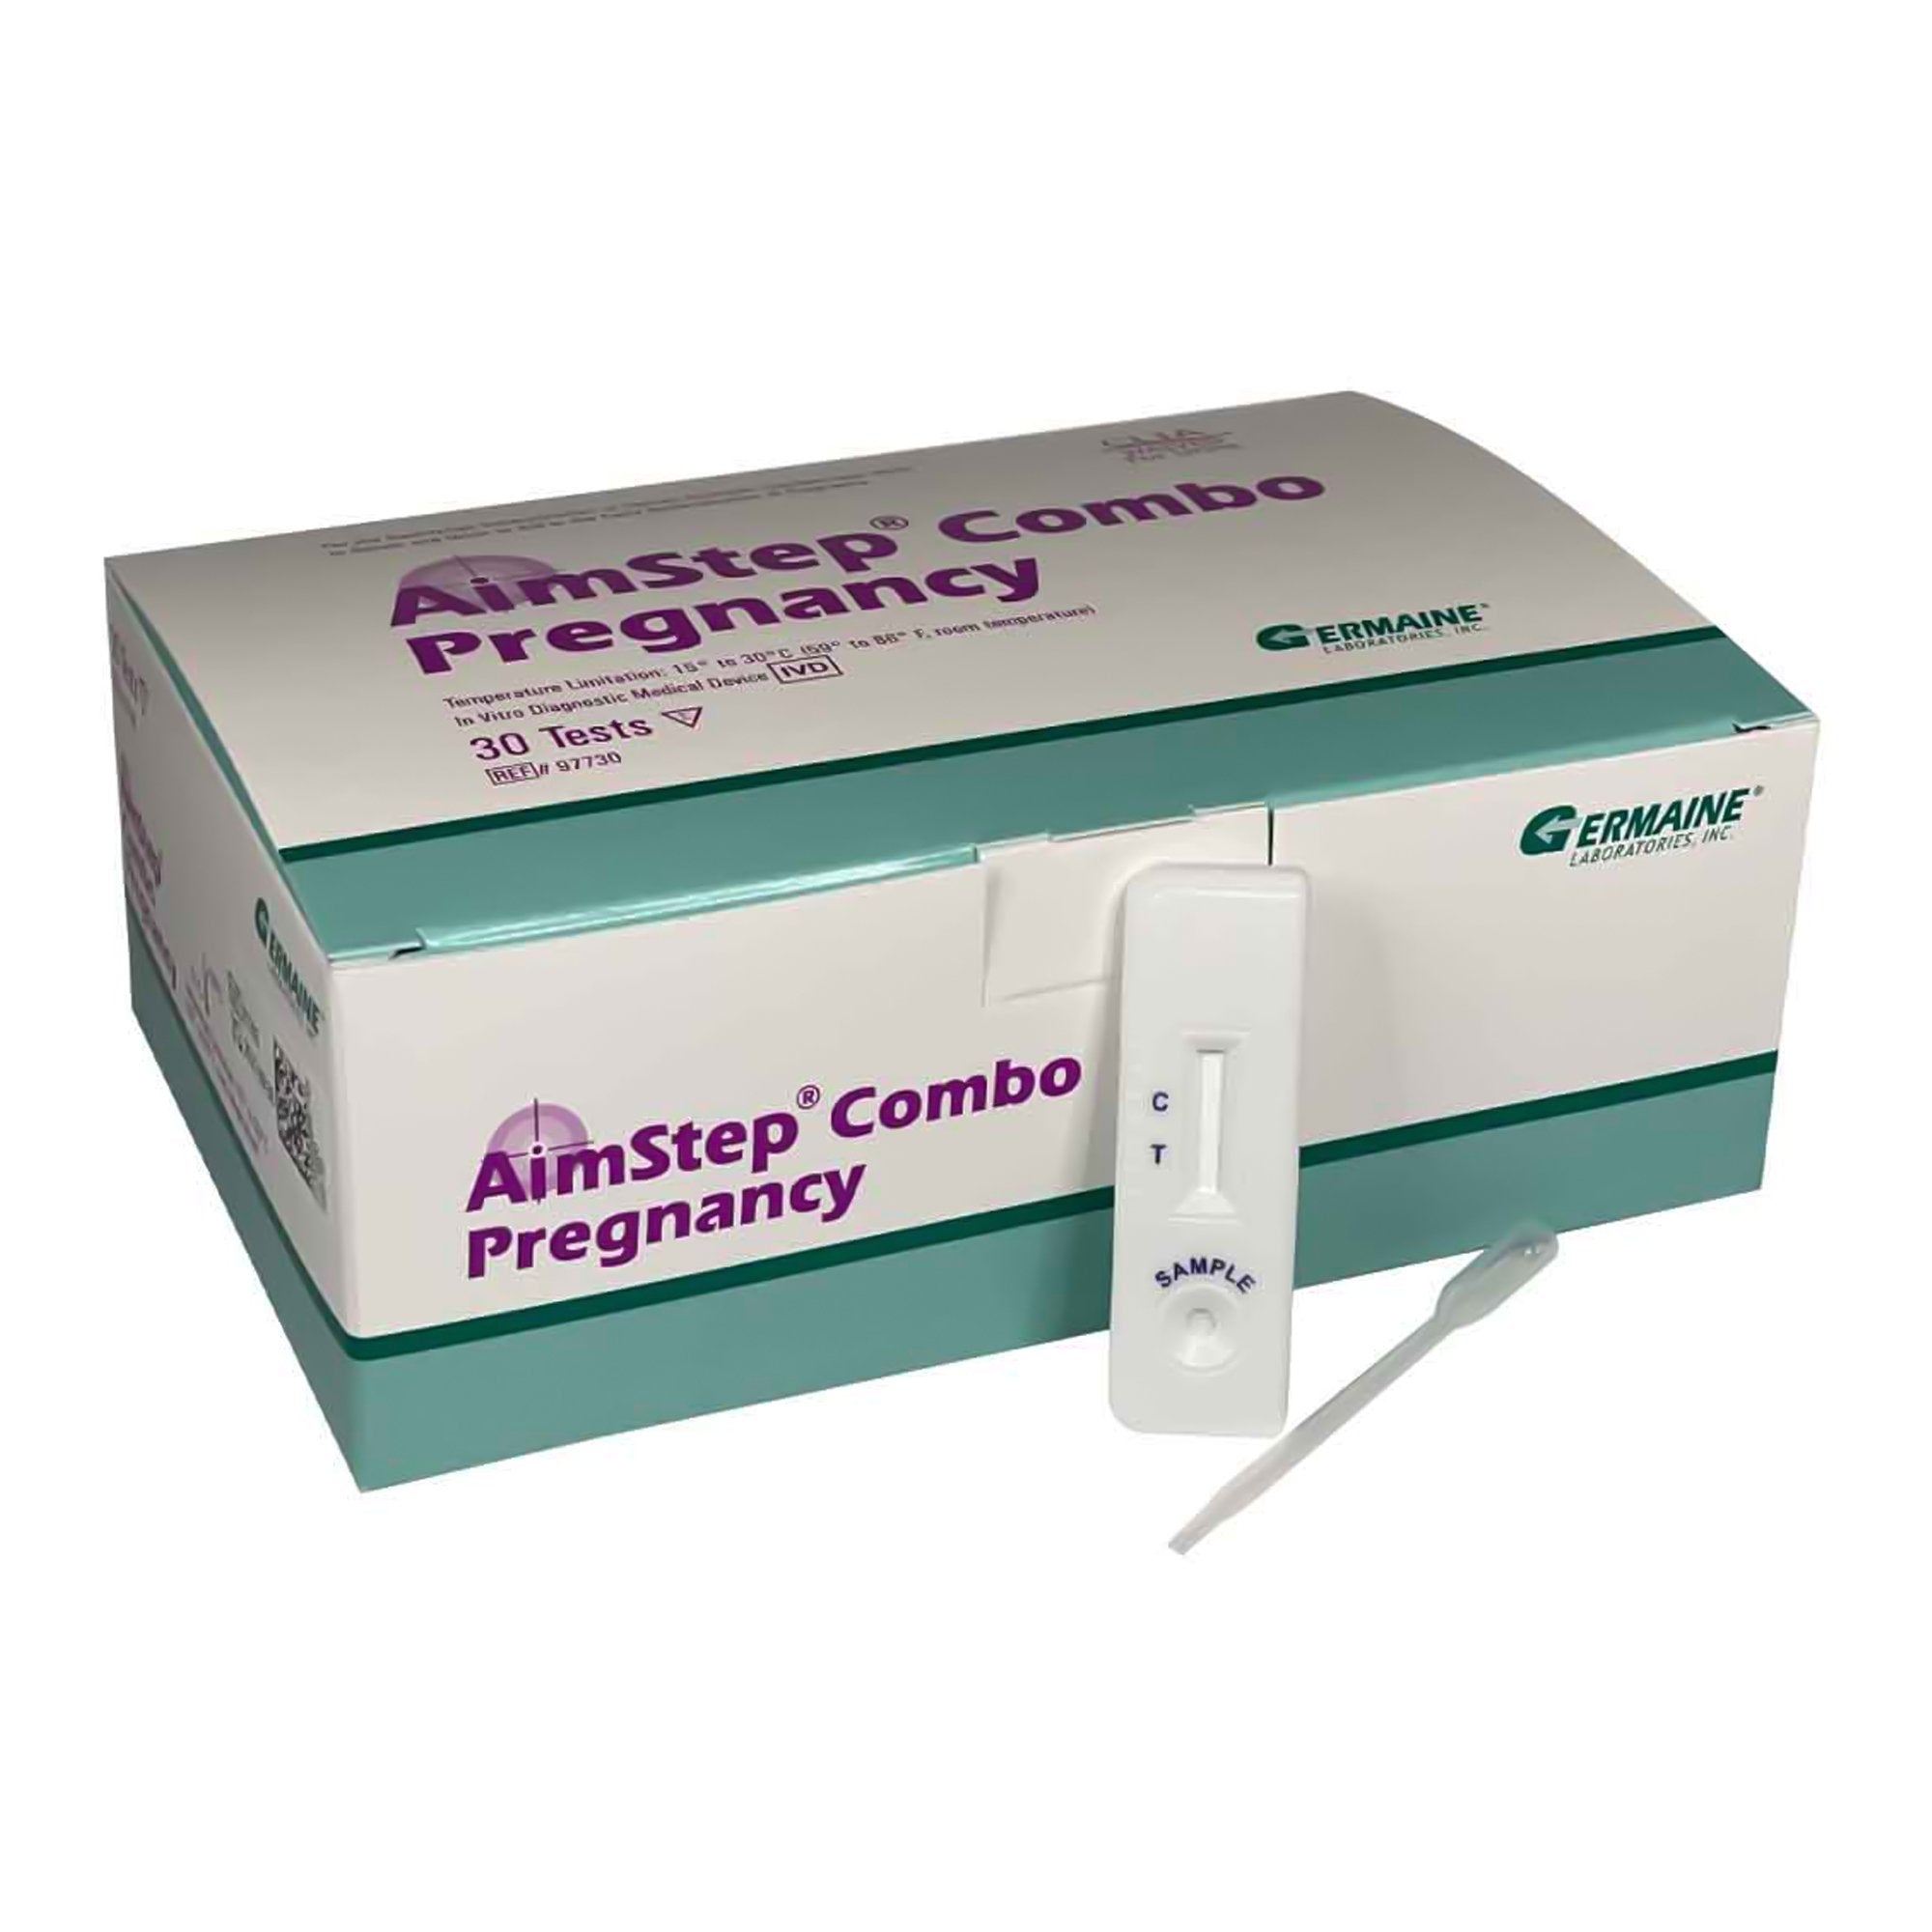 AimStep® Combo hCG Pregnancy Fertility Reproductive Health Test Kit